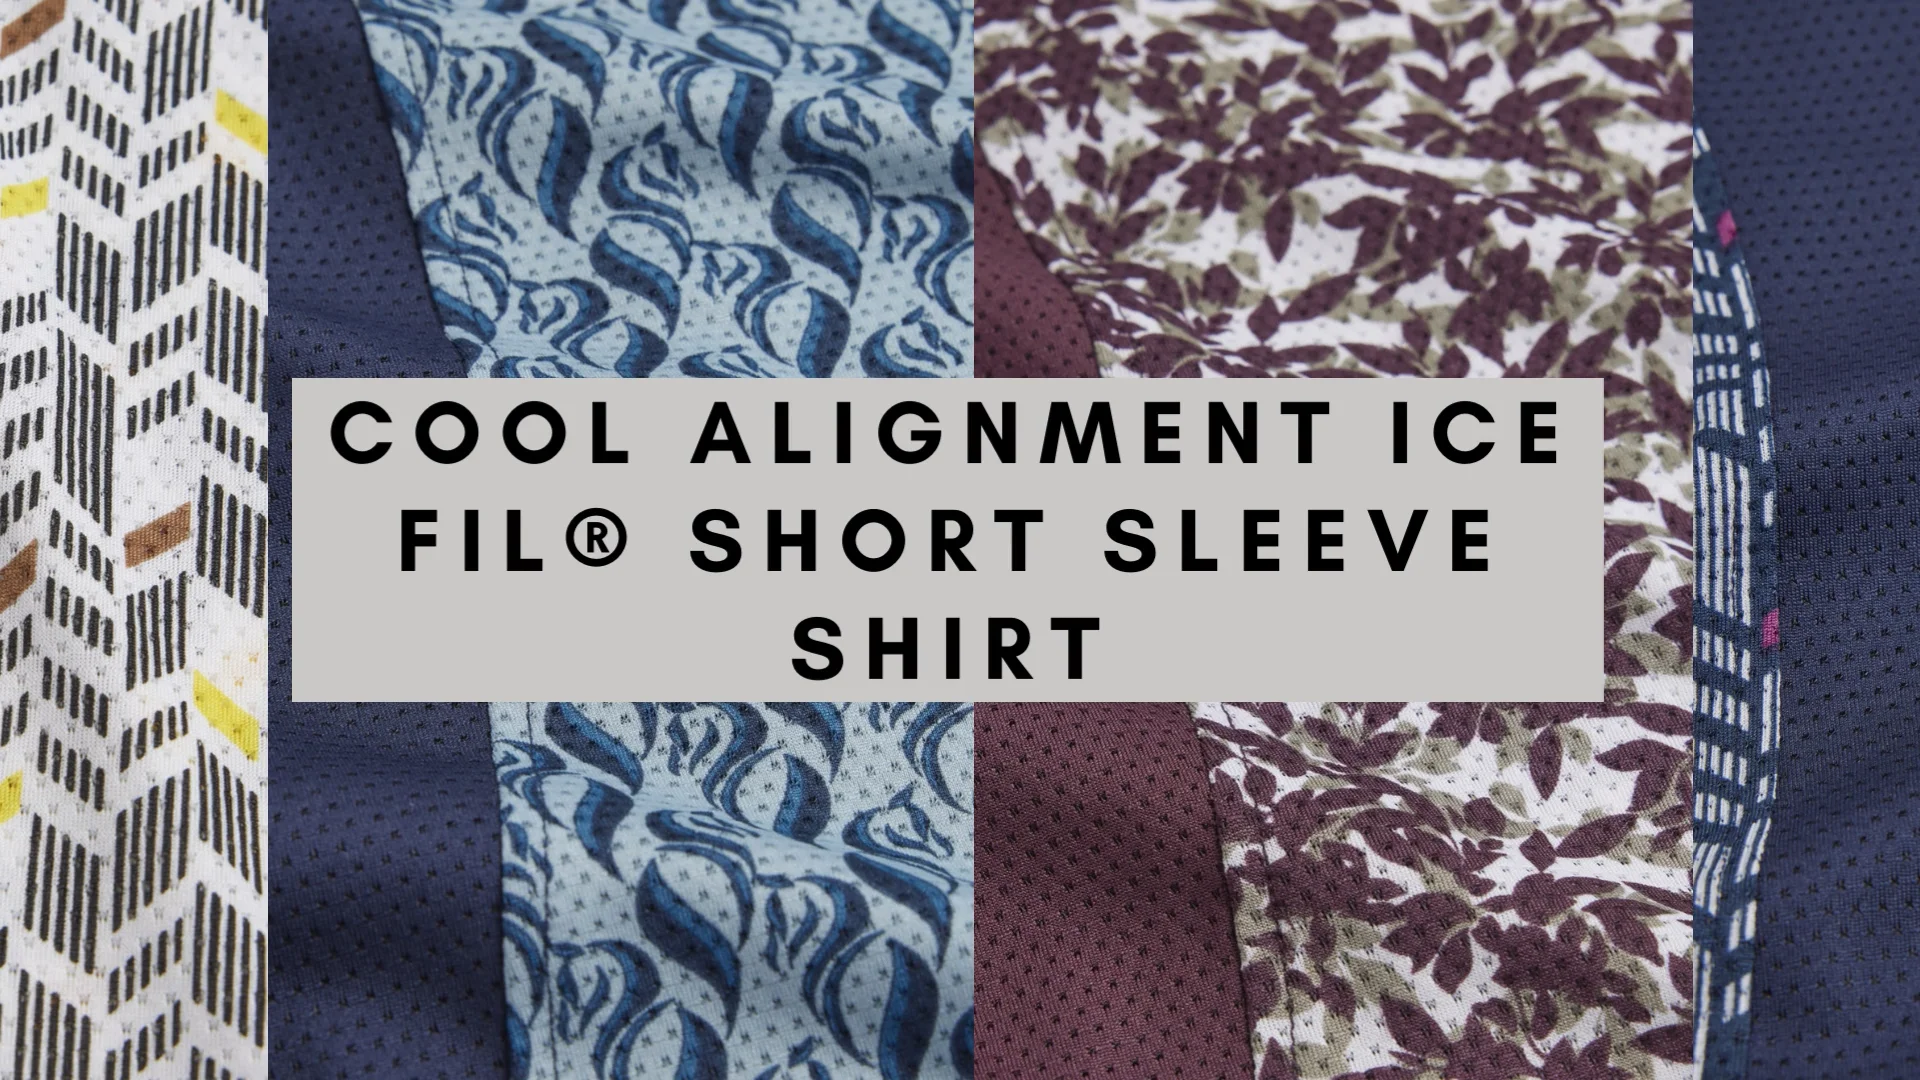 Cool Alignment Ice Fil® Short Sleeve Shirt on Vimeo